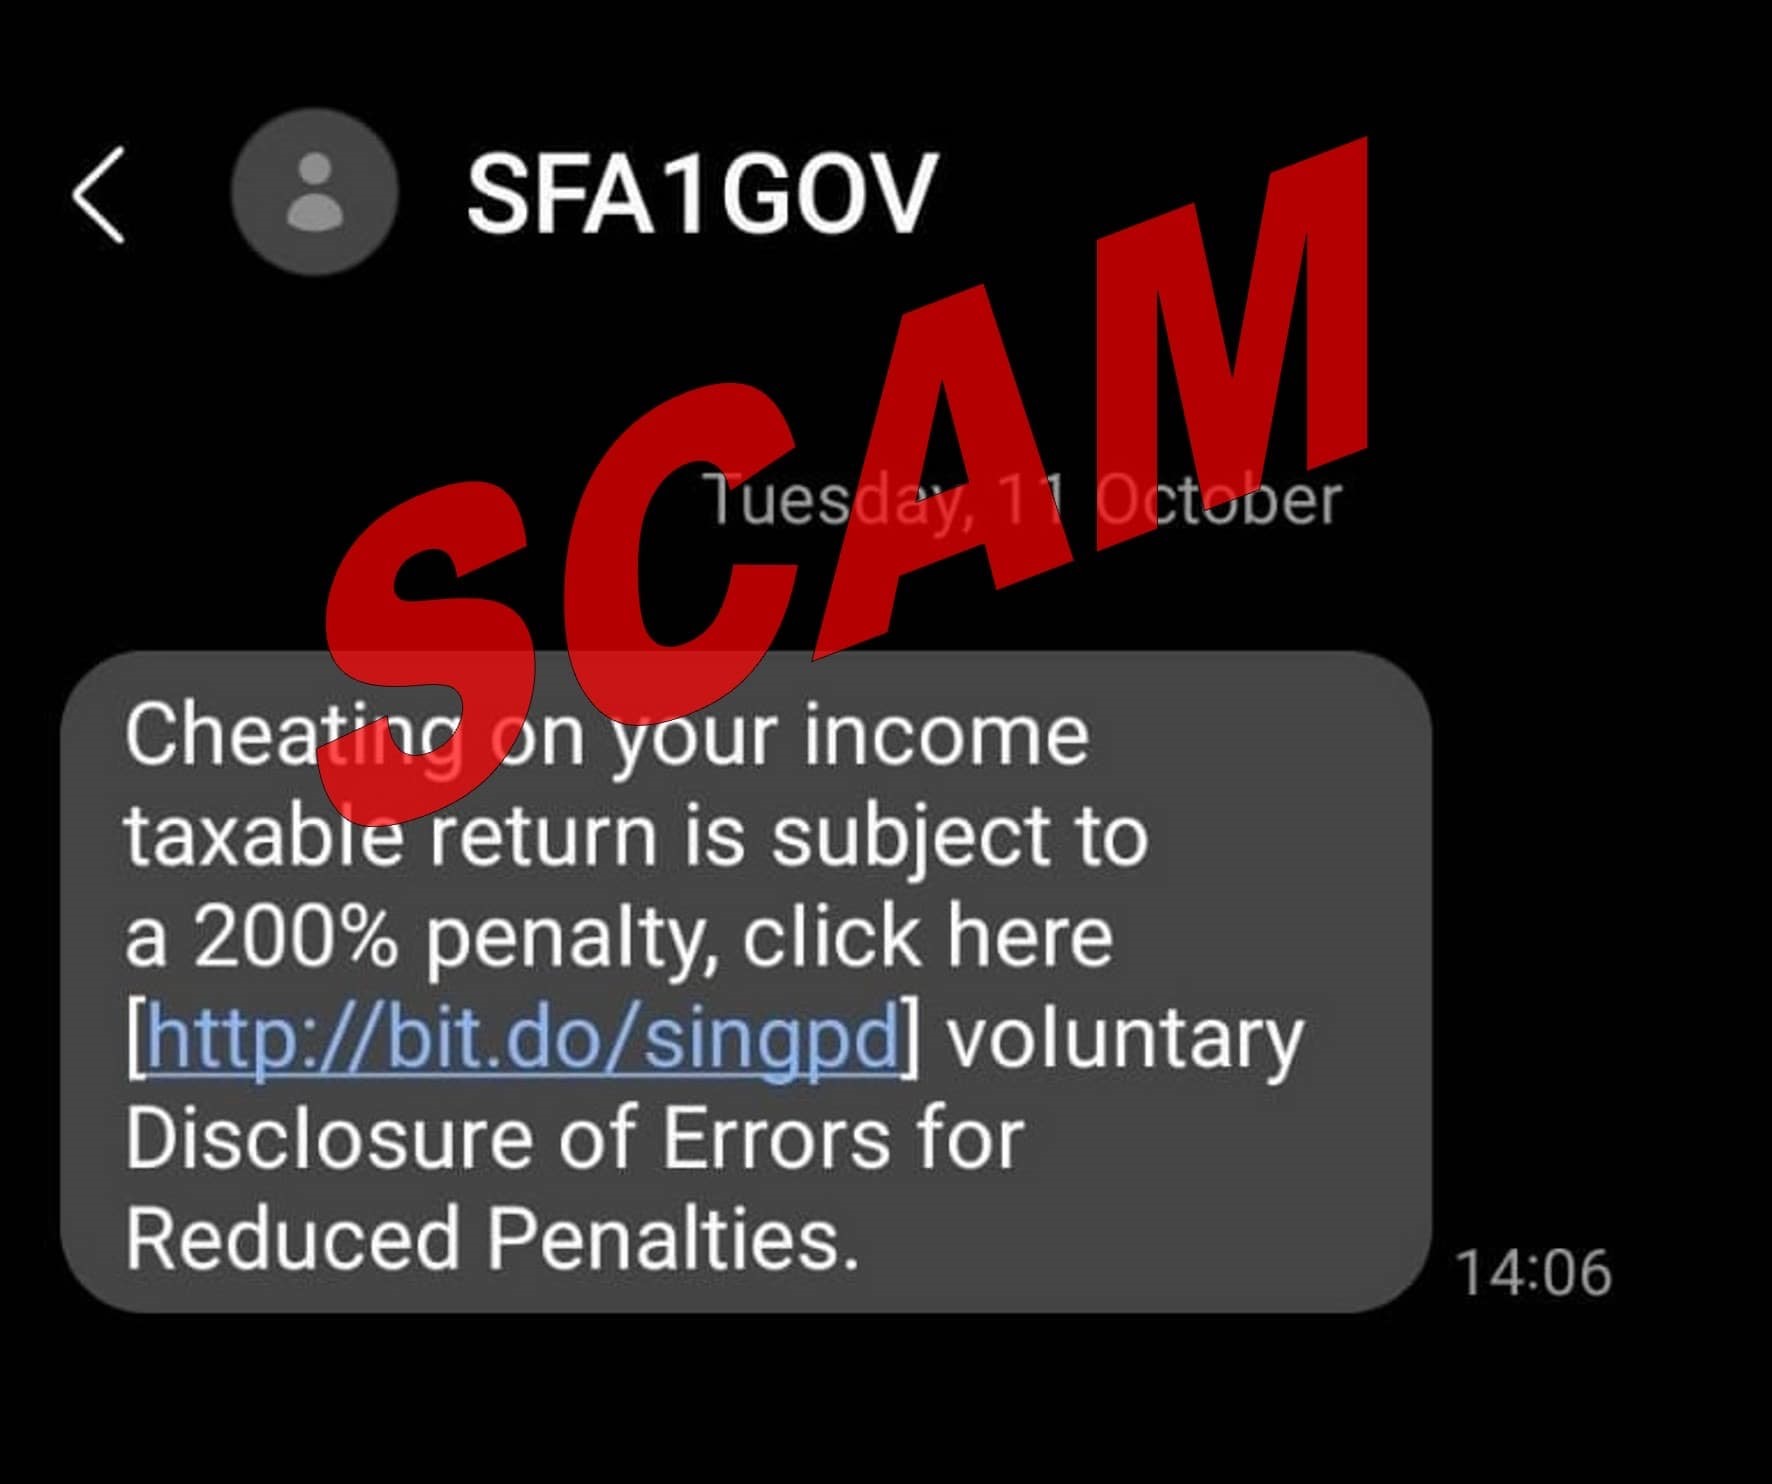 Phishing scam_12 Oct